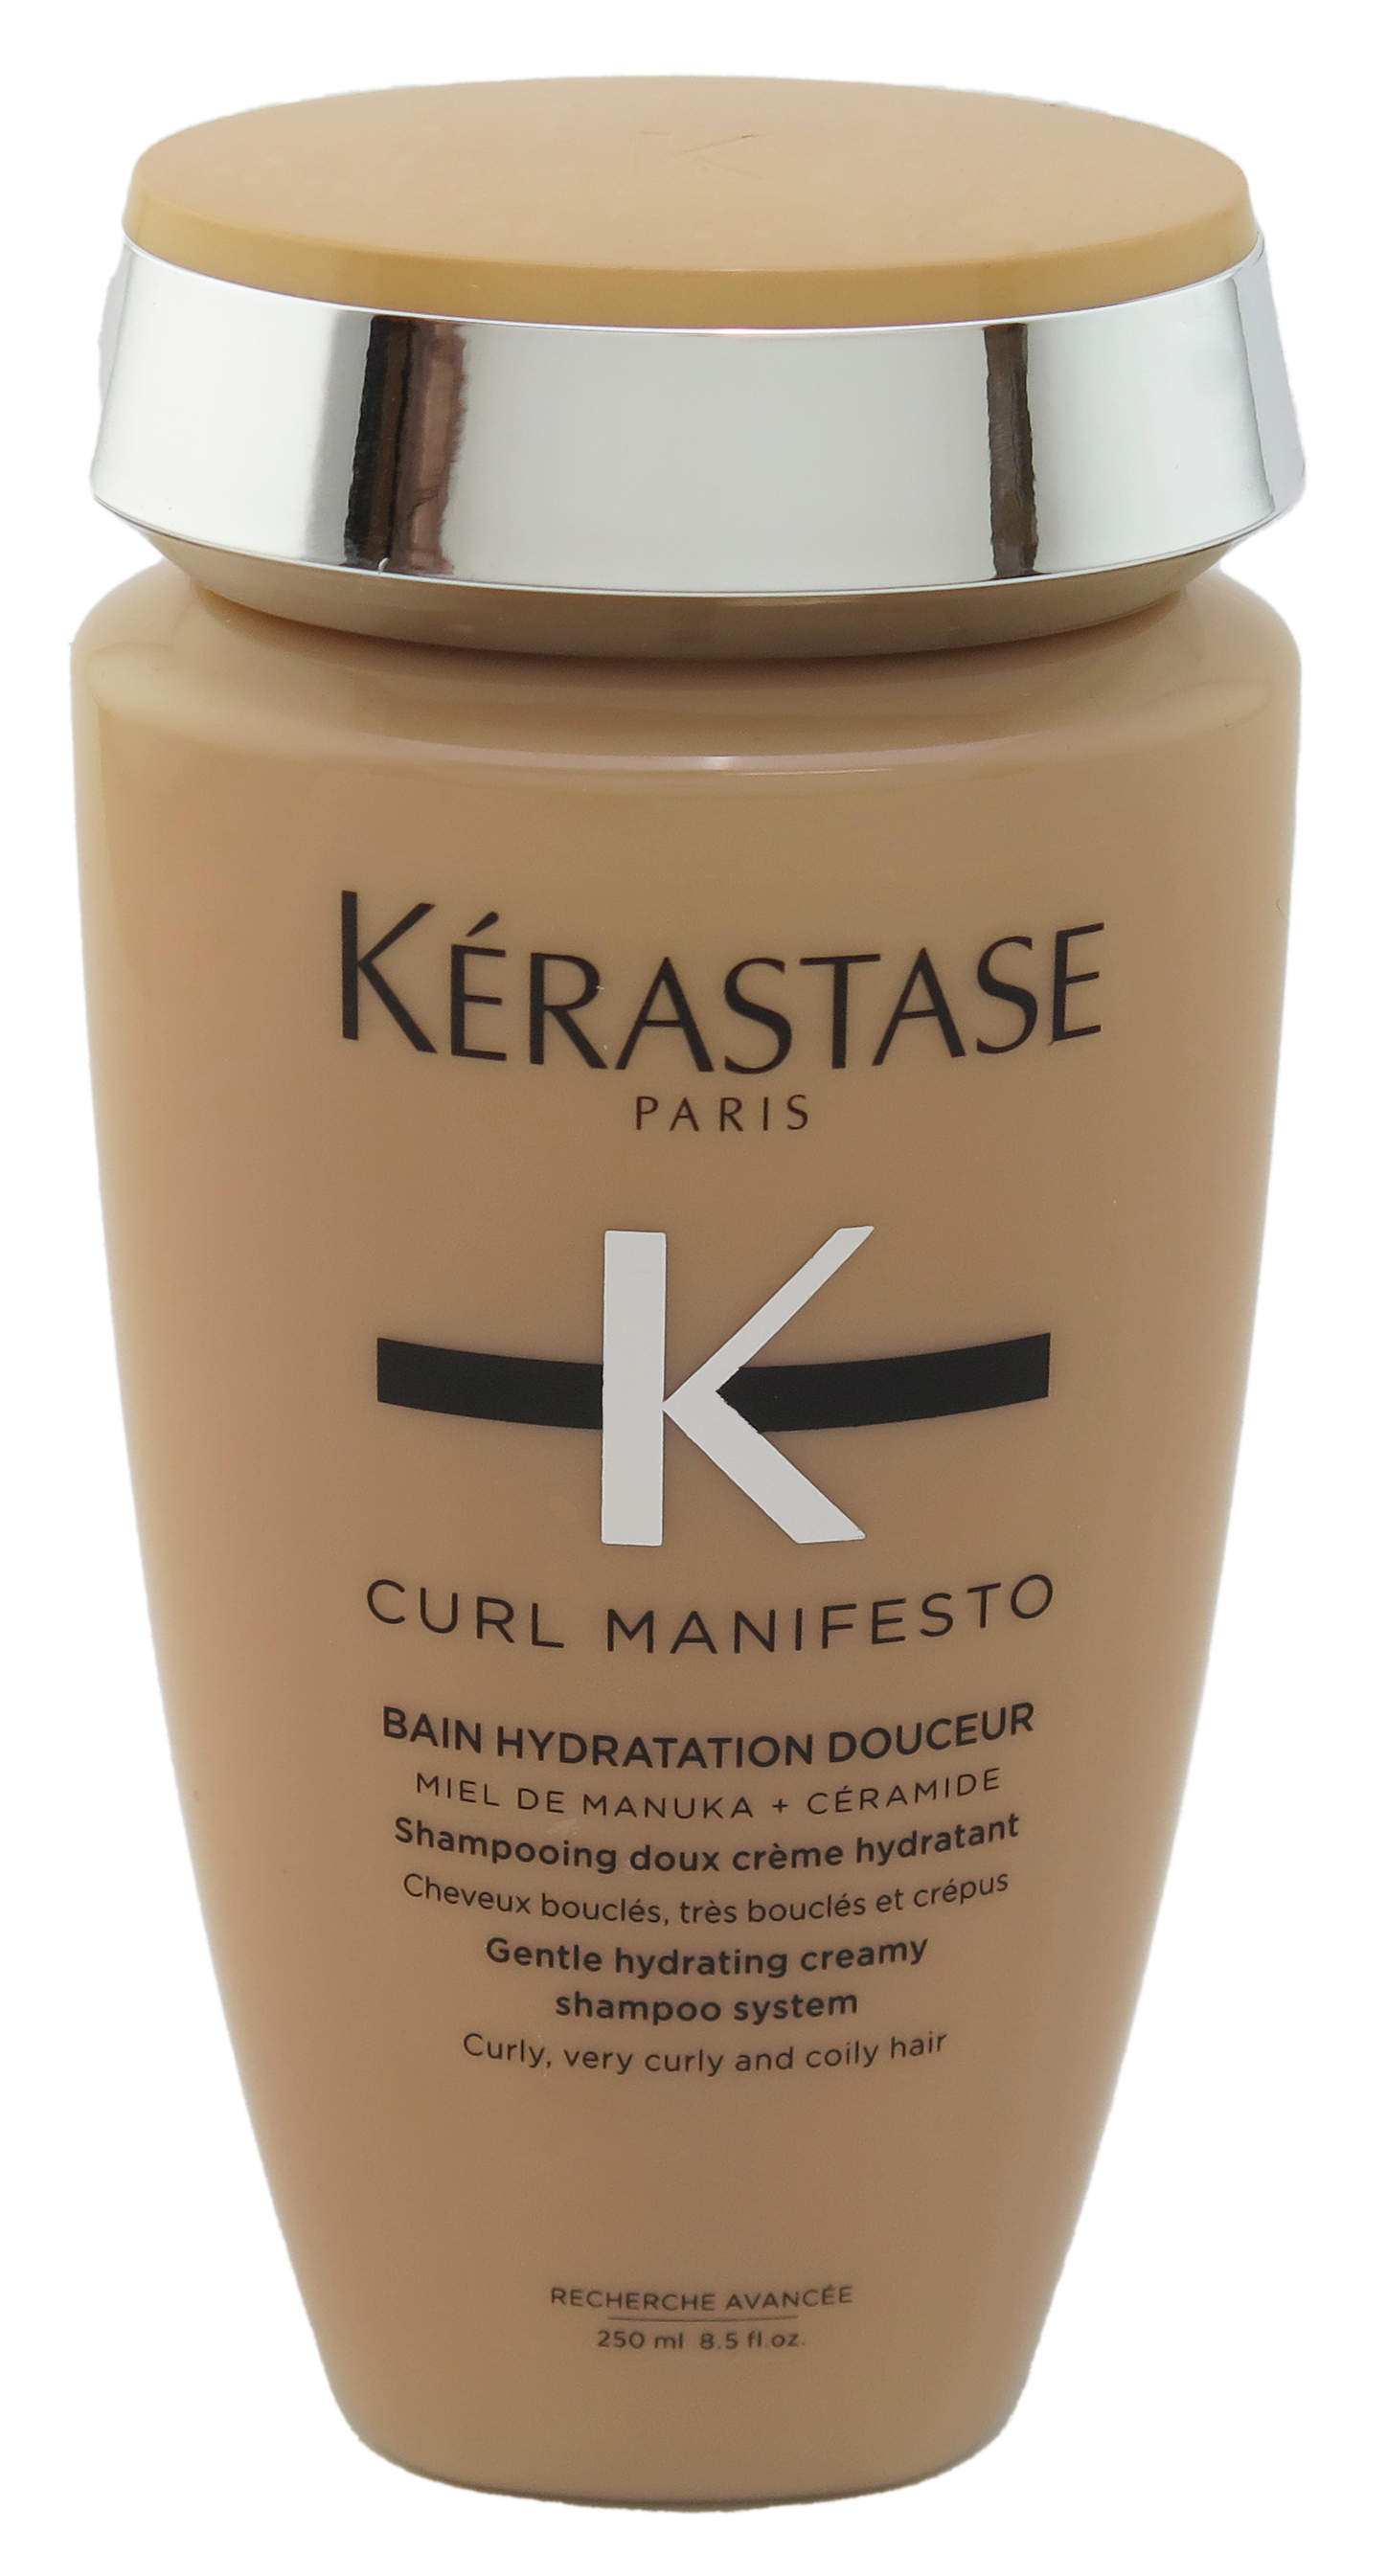 Kerastase Curl Manifesto Bain Hydratation Douceur Shampoo 8.5 fl oz